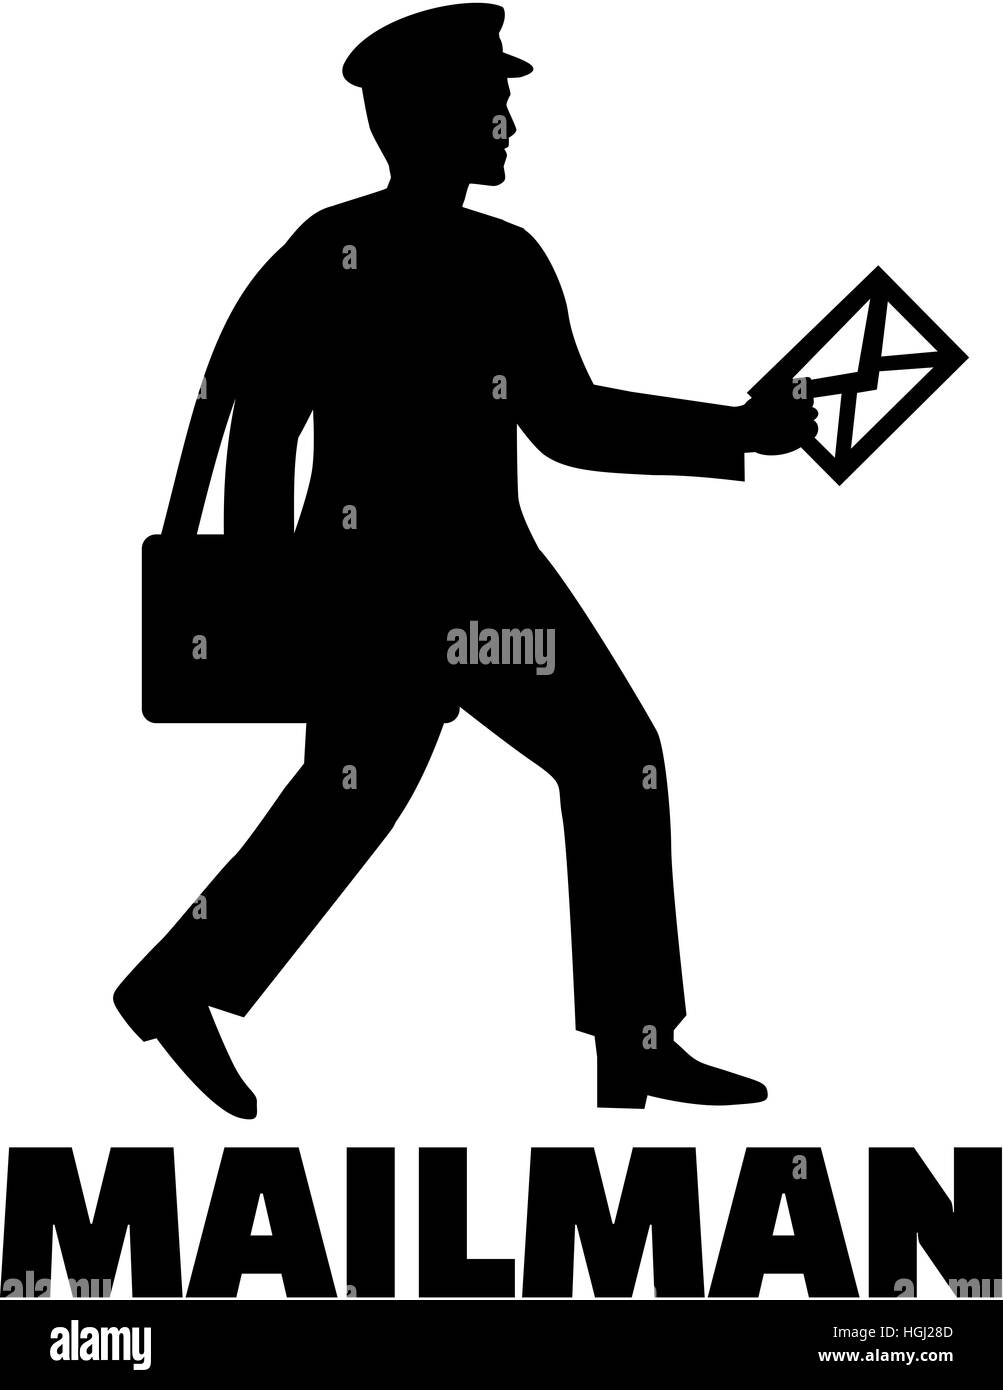 Mailman with job title Stock Photo